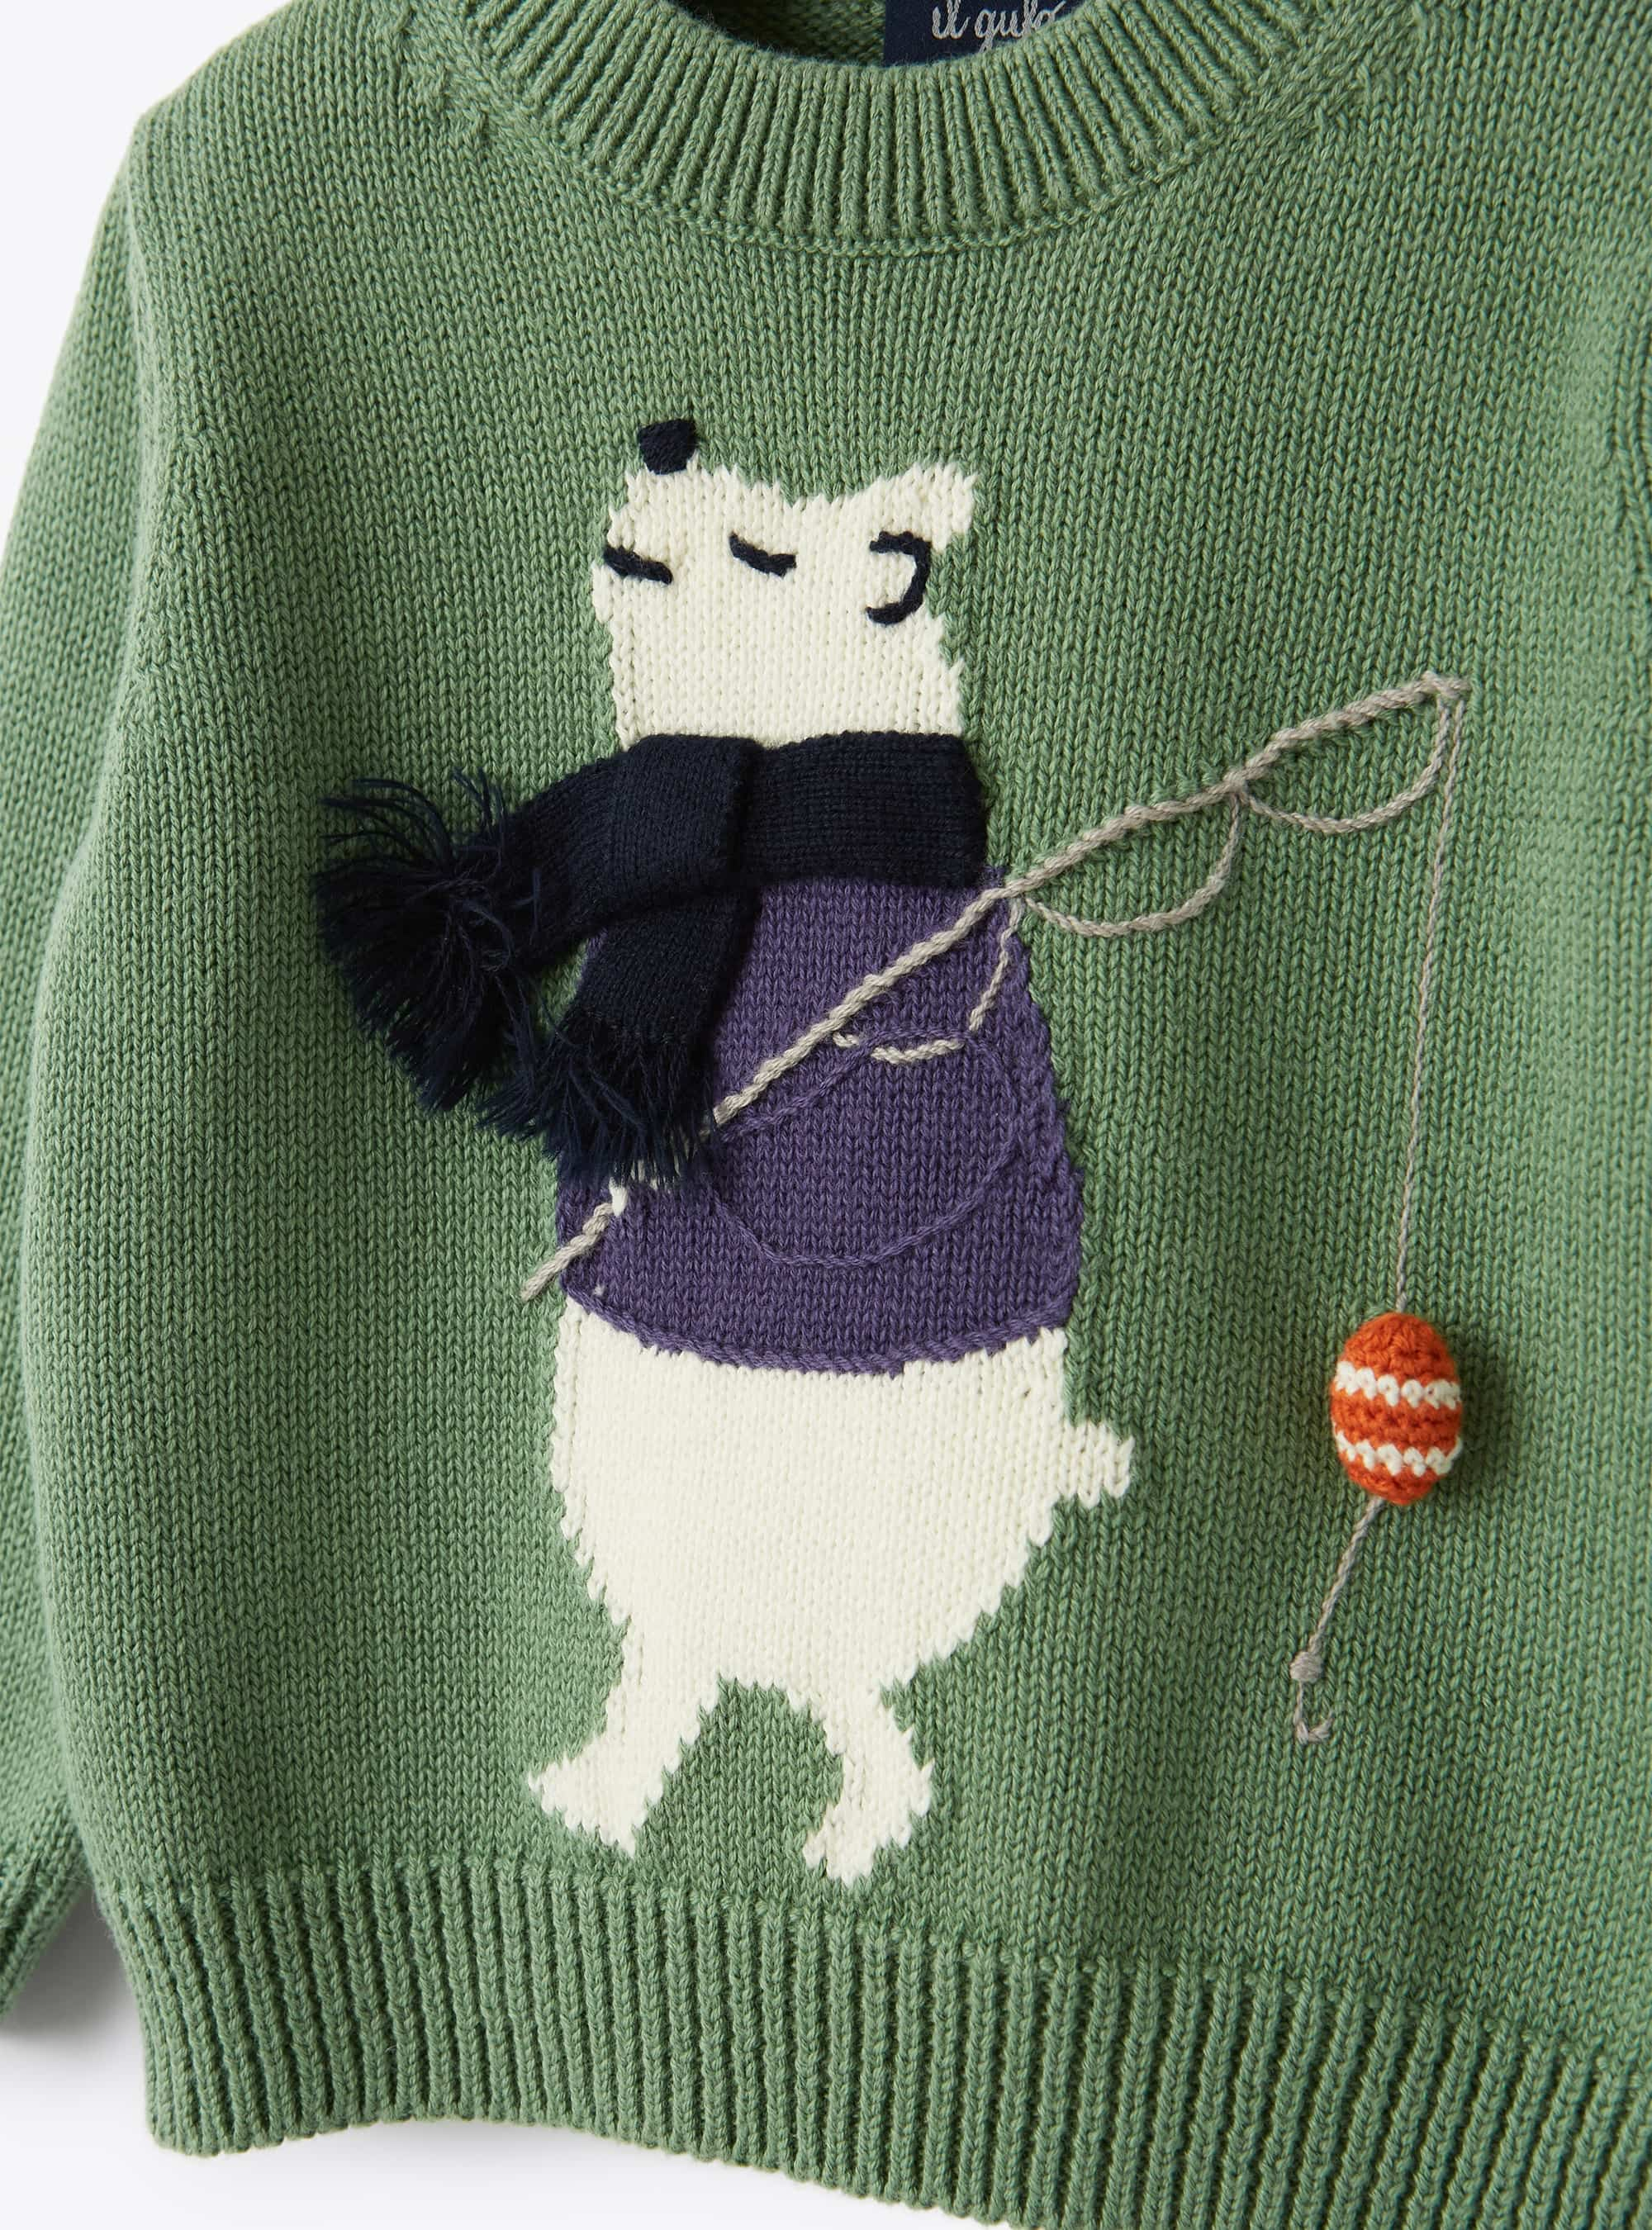 Grüner Baumwollpullover mit Bär - Grün | Il Gufo